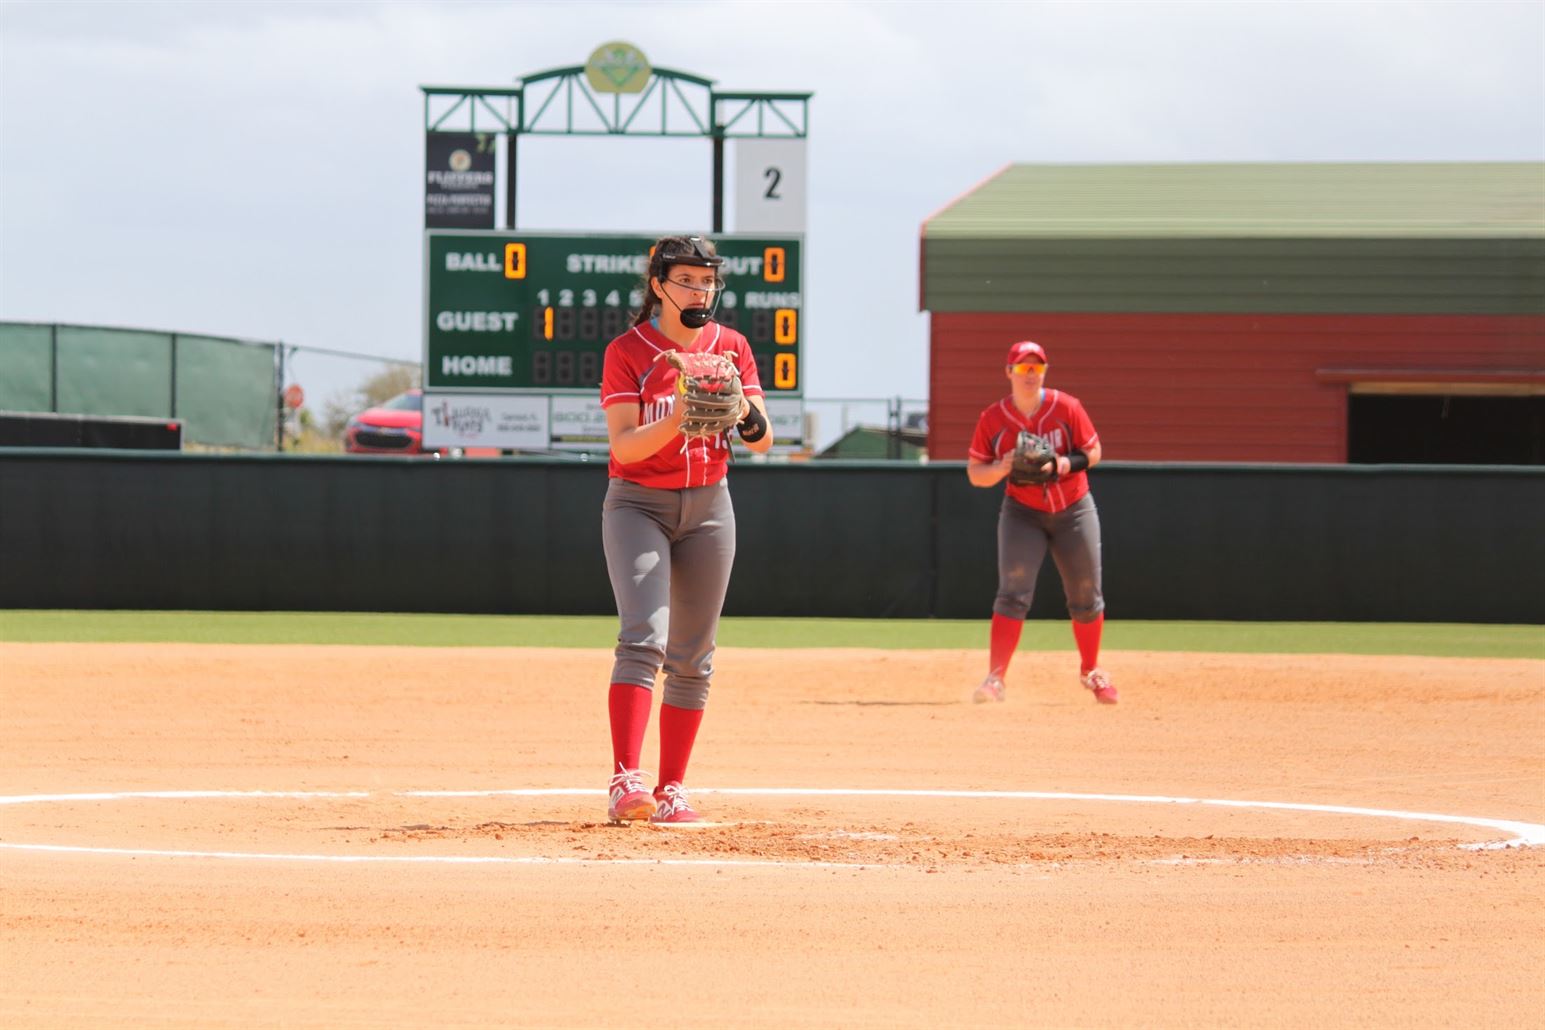 Kiara Ruiz's softball season was cut short because of the COVID-19 pandemic. Photo courtesy of Kiara Ruiz